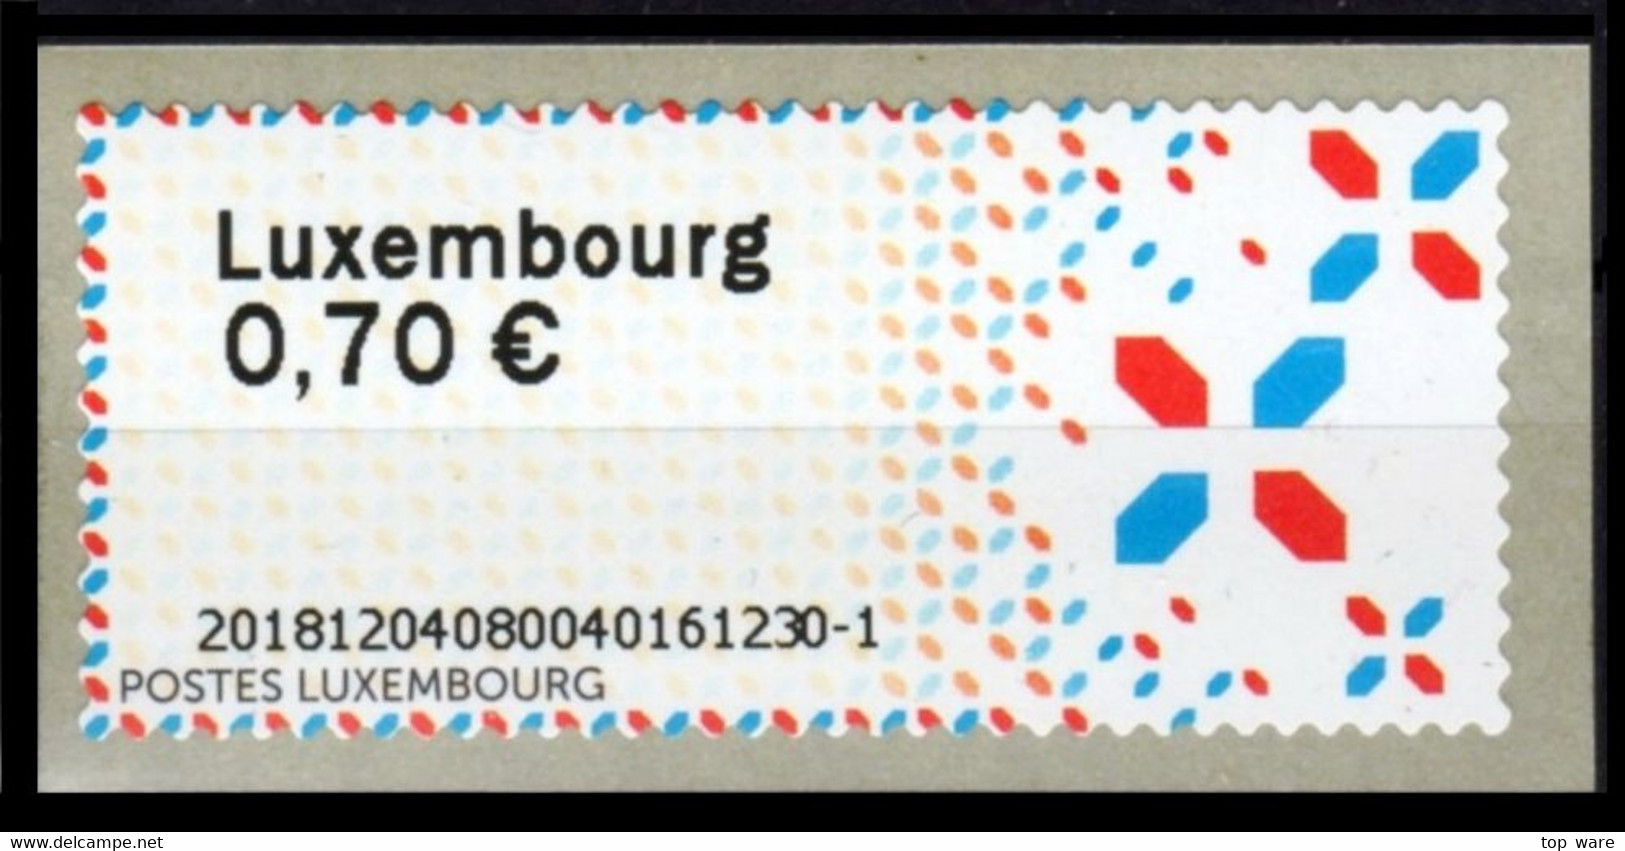 Luxemburg Luxembourg Timbres ATM 1-9 / Automatenmarken 1983-2021 komplett, postfrisch / distributeurs etiquetas